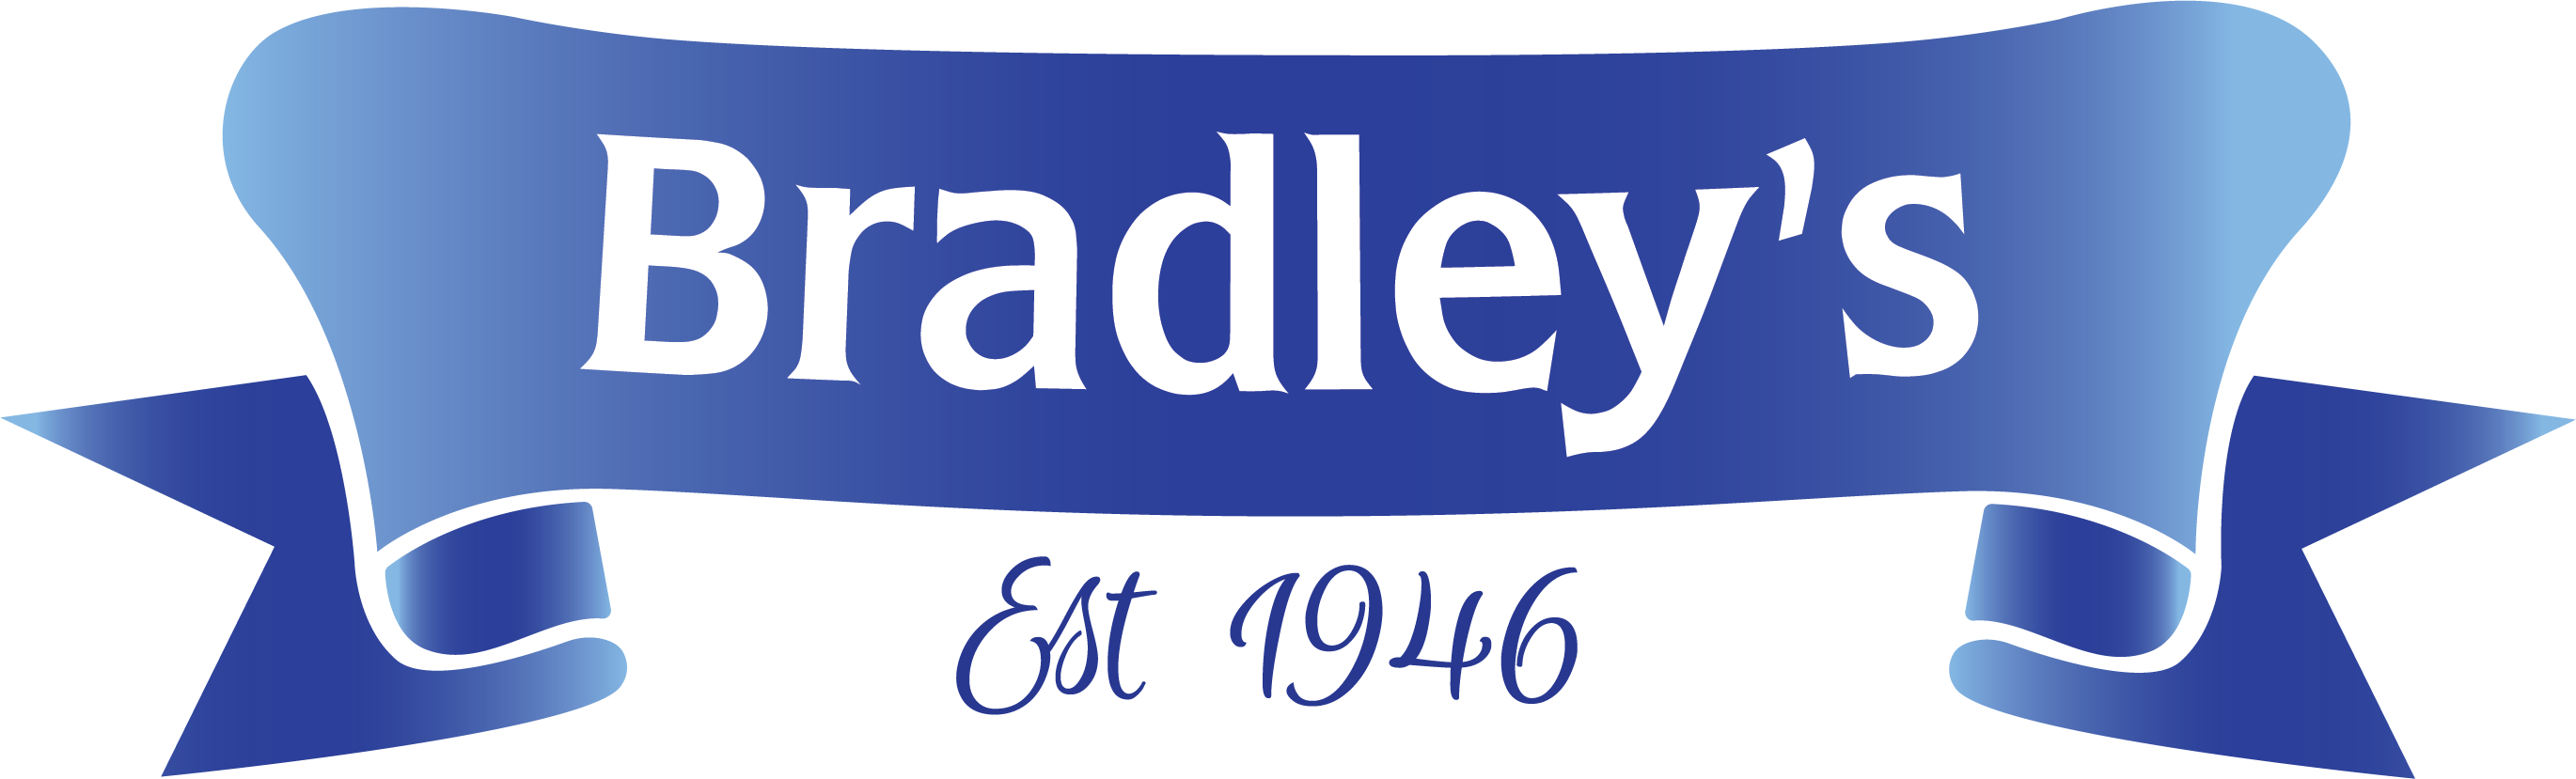 Bradleys Blue